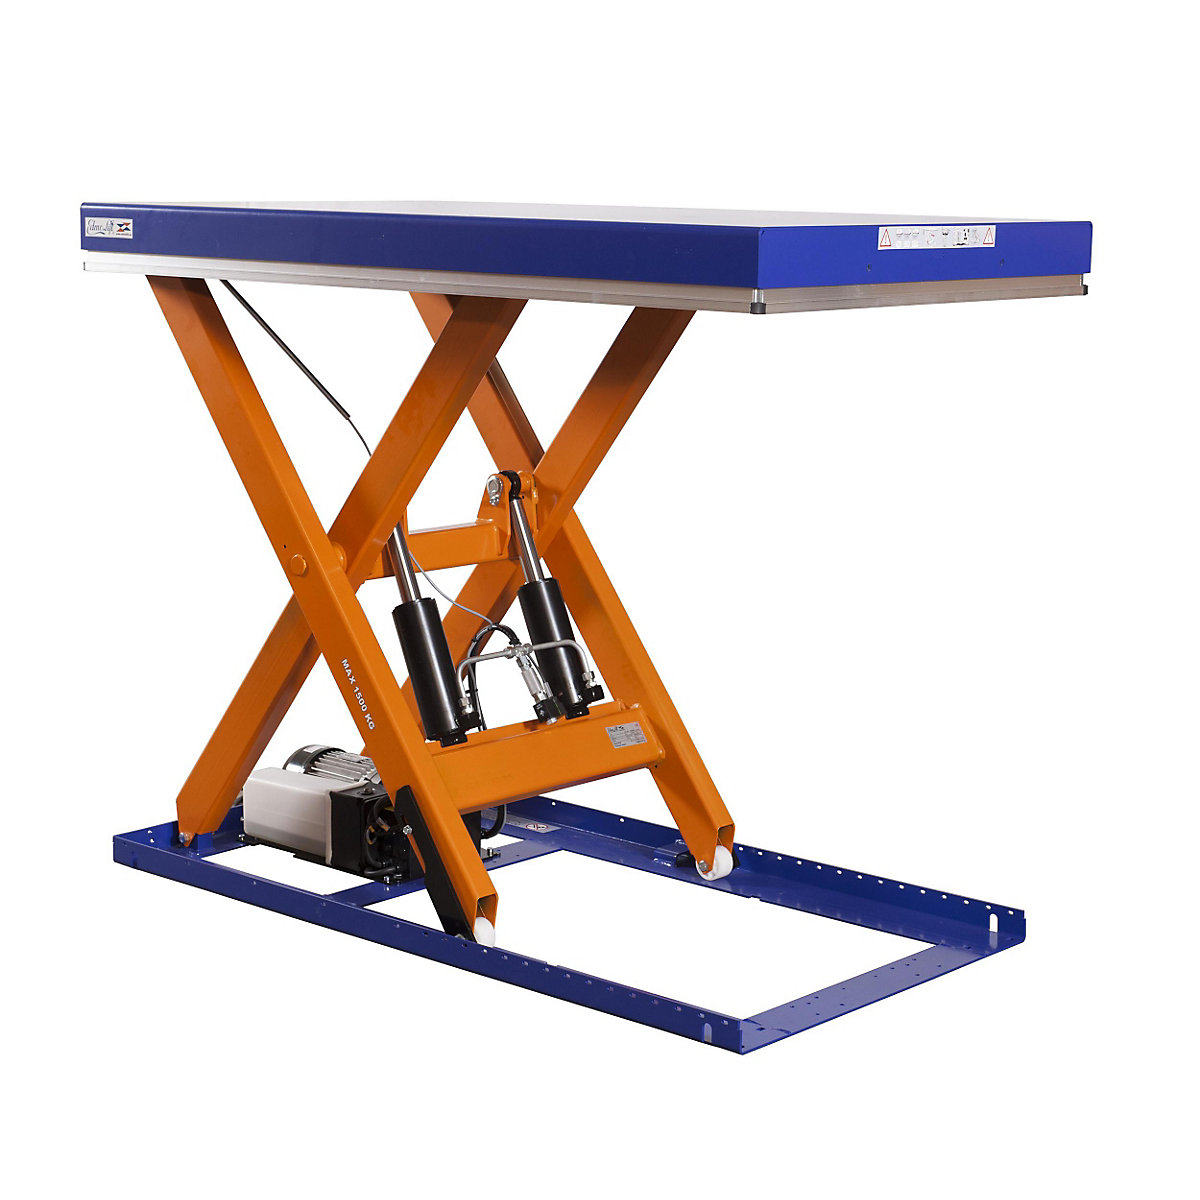 Compact lift table – Edmolift, max. load 1500 kg, platform LxW 1700 x 1000 mm, effective lift 1100 mm